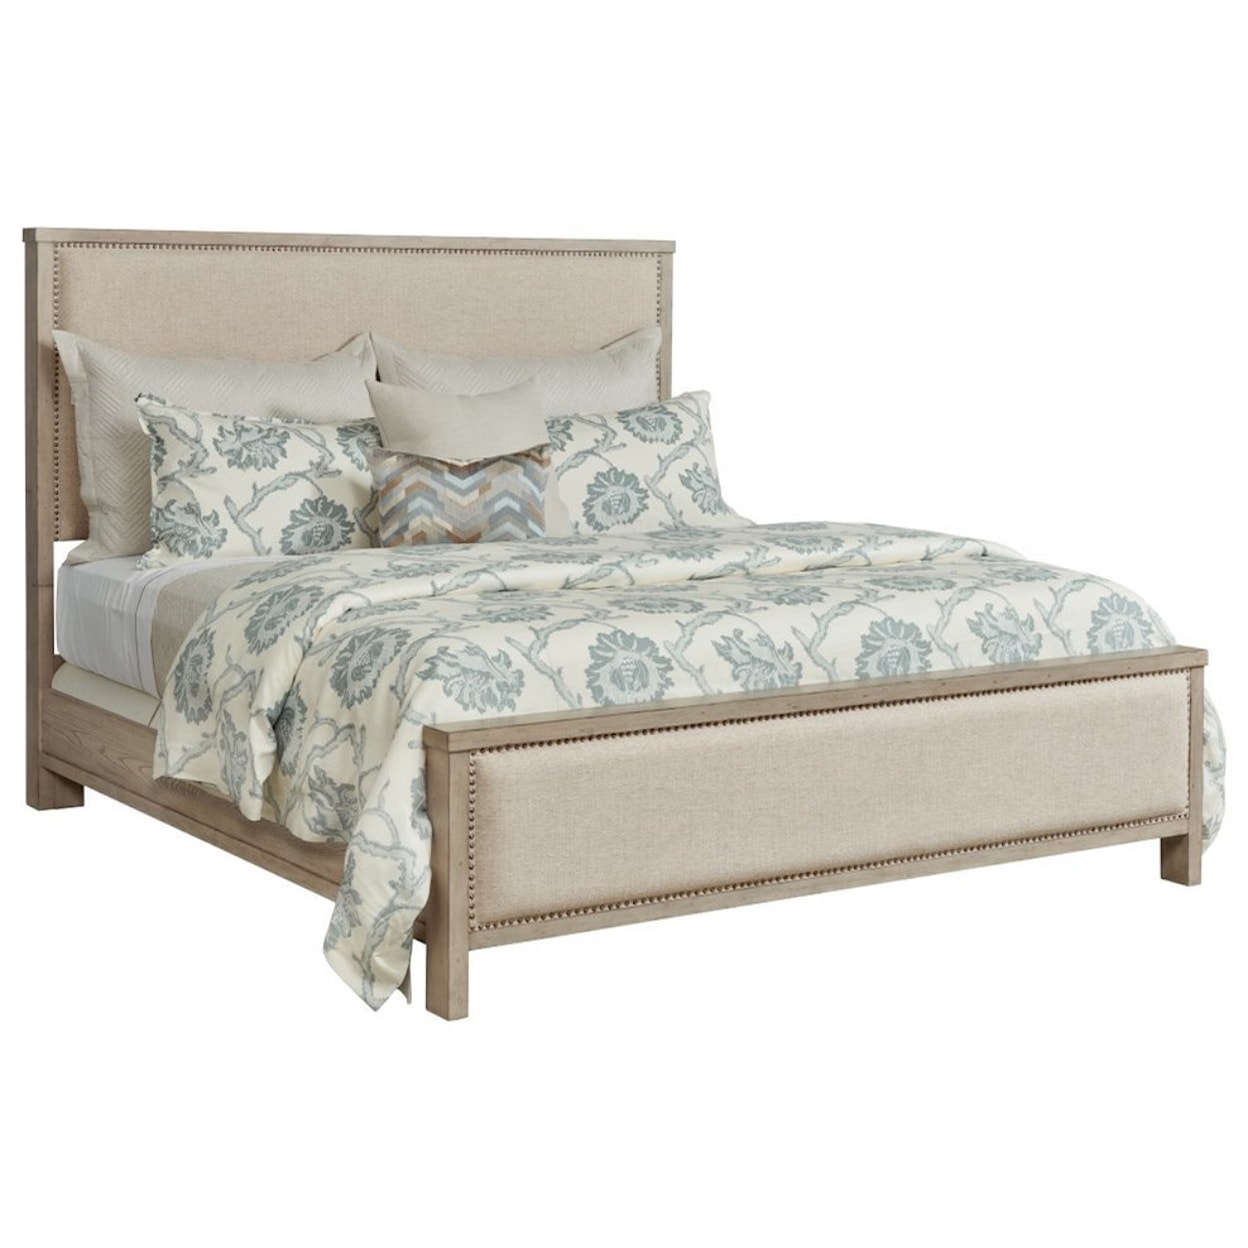 American Drew West Fork Jacksonville Queen Upholstered Bed